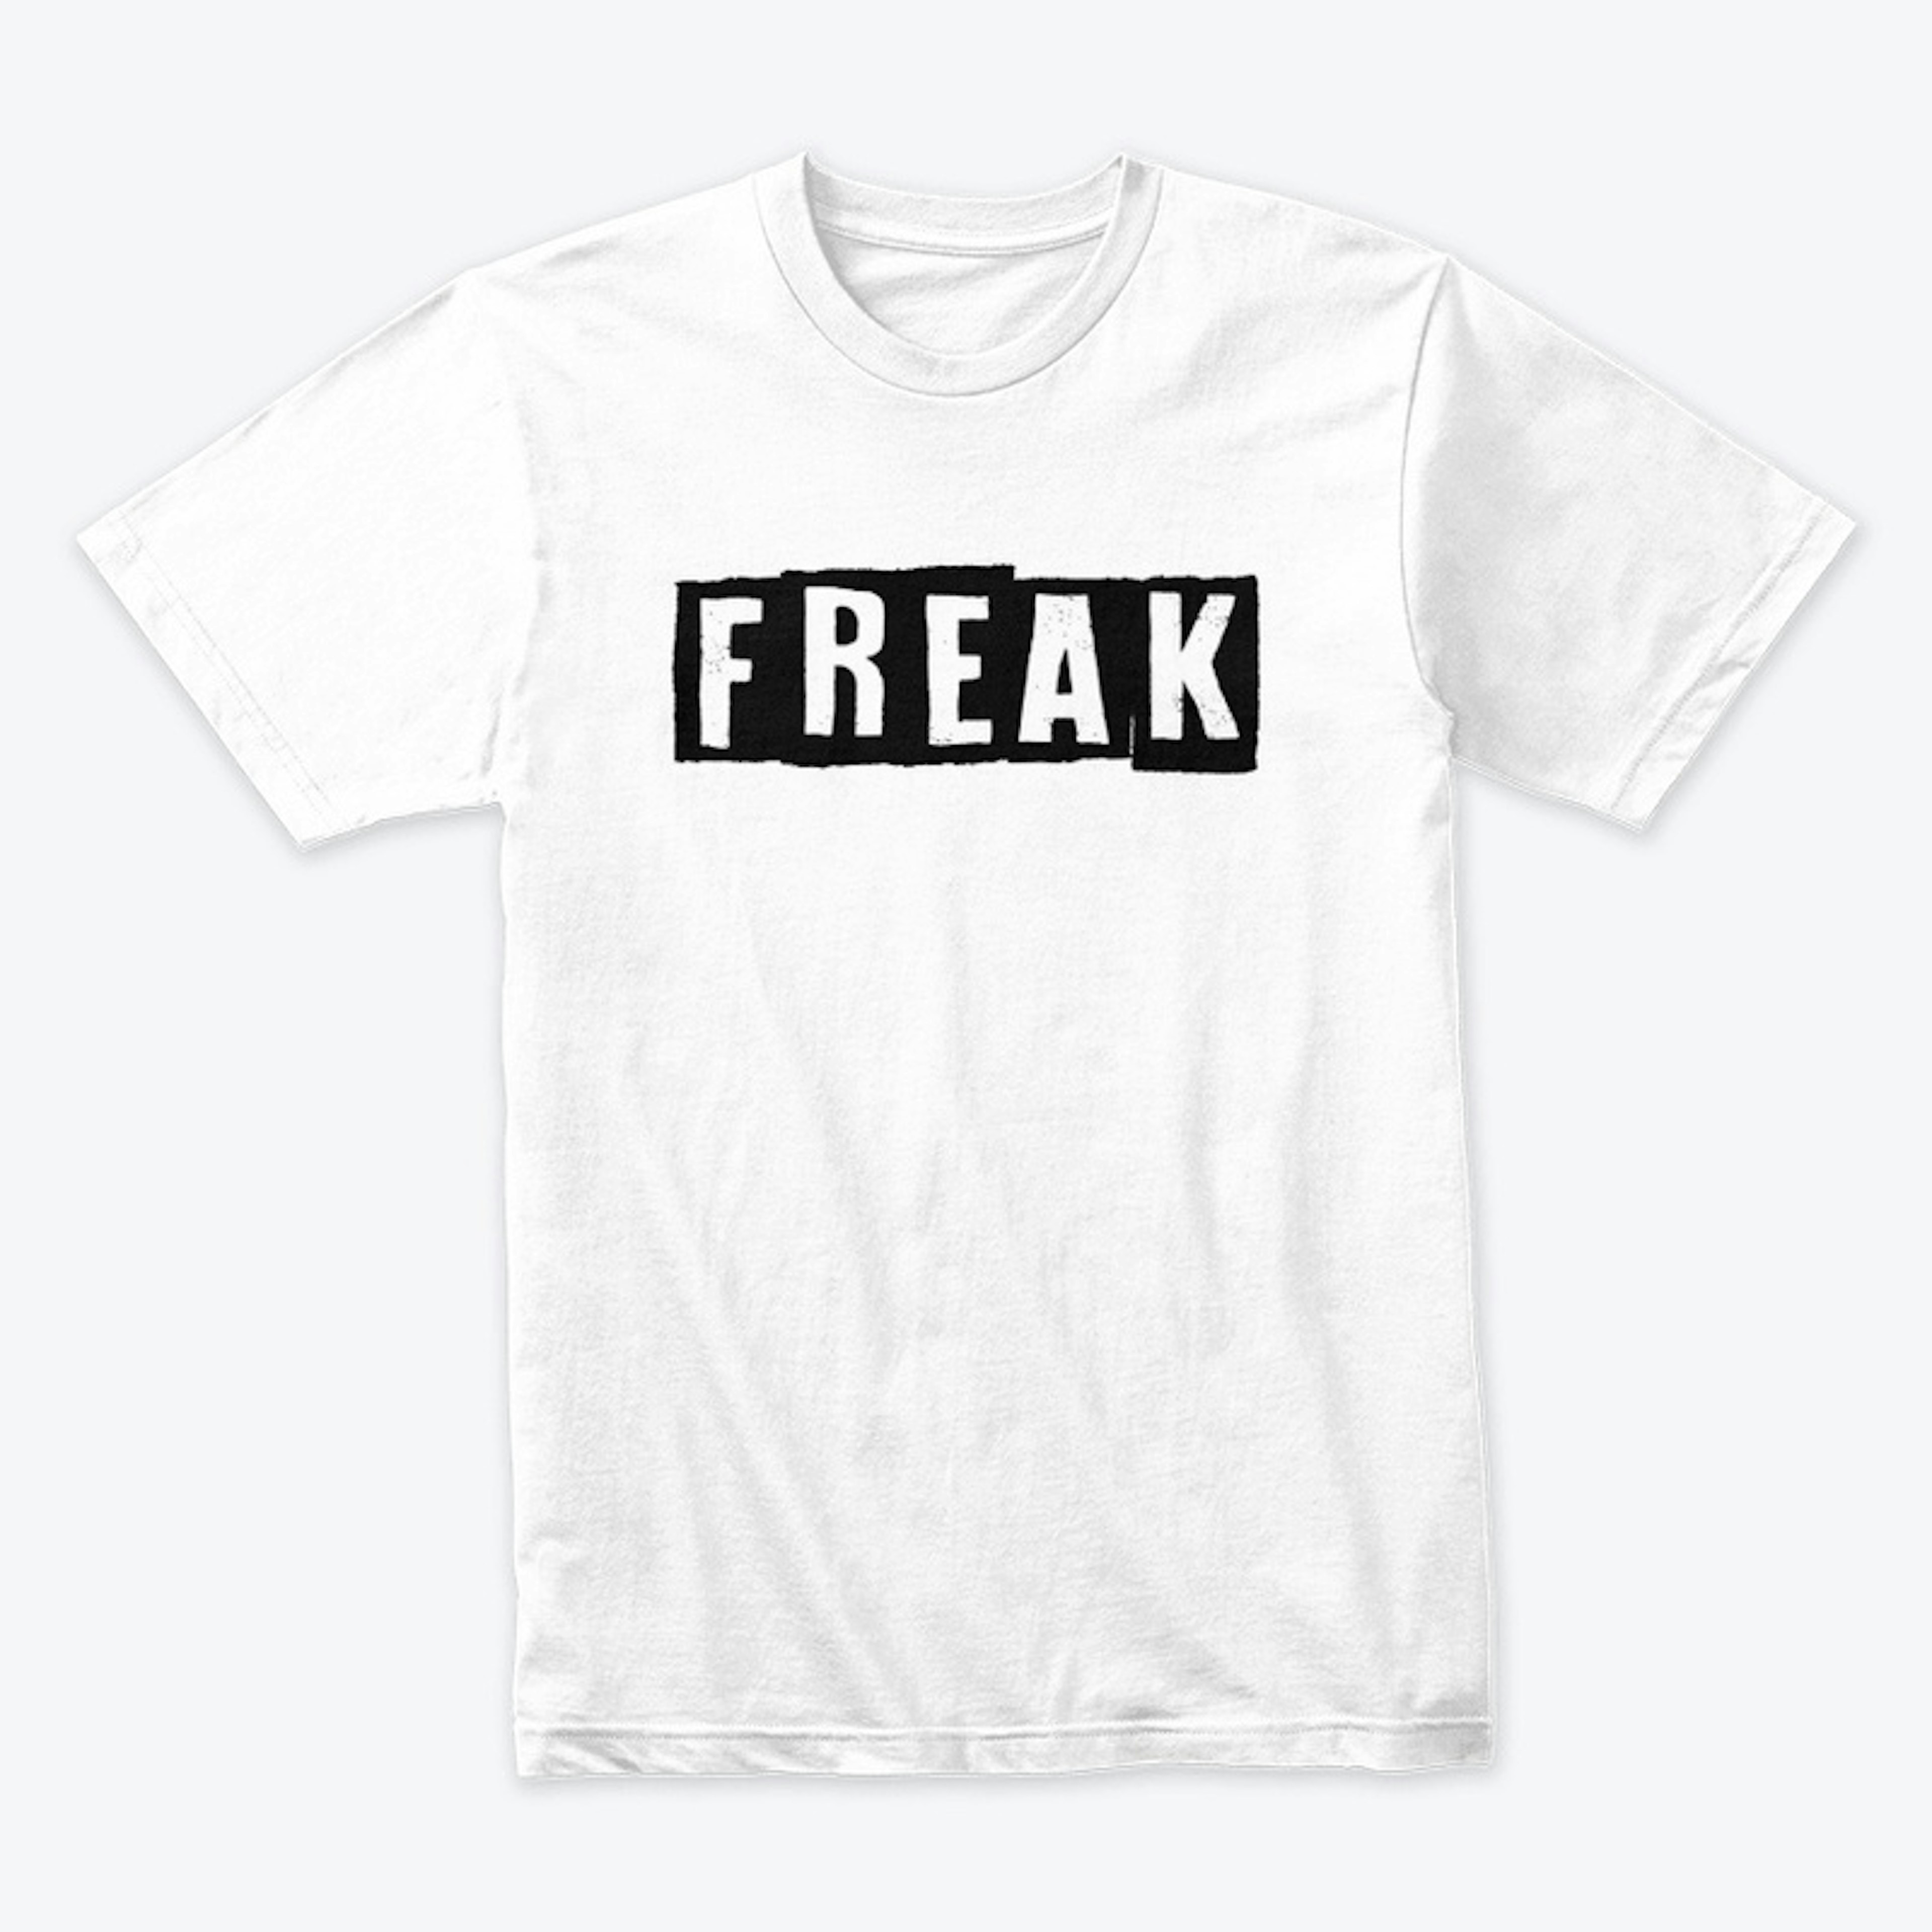 Freak (white)